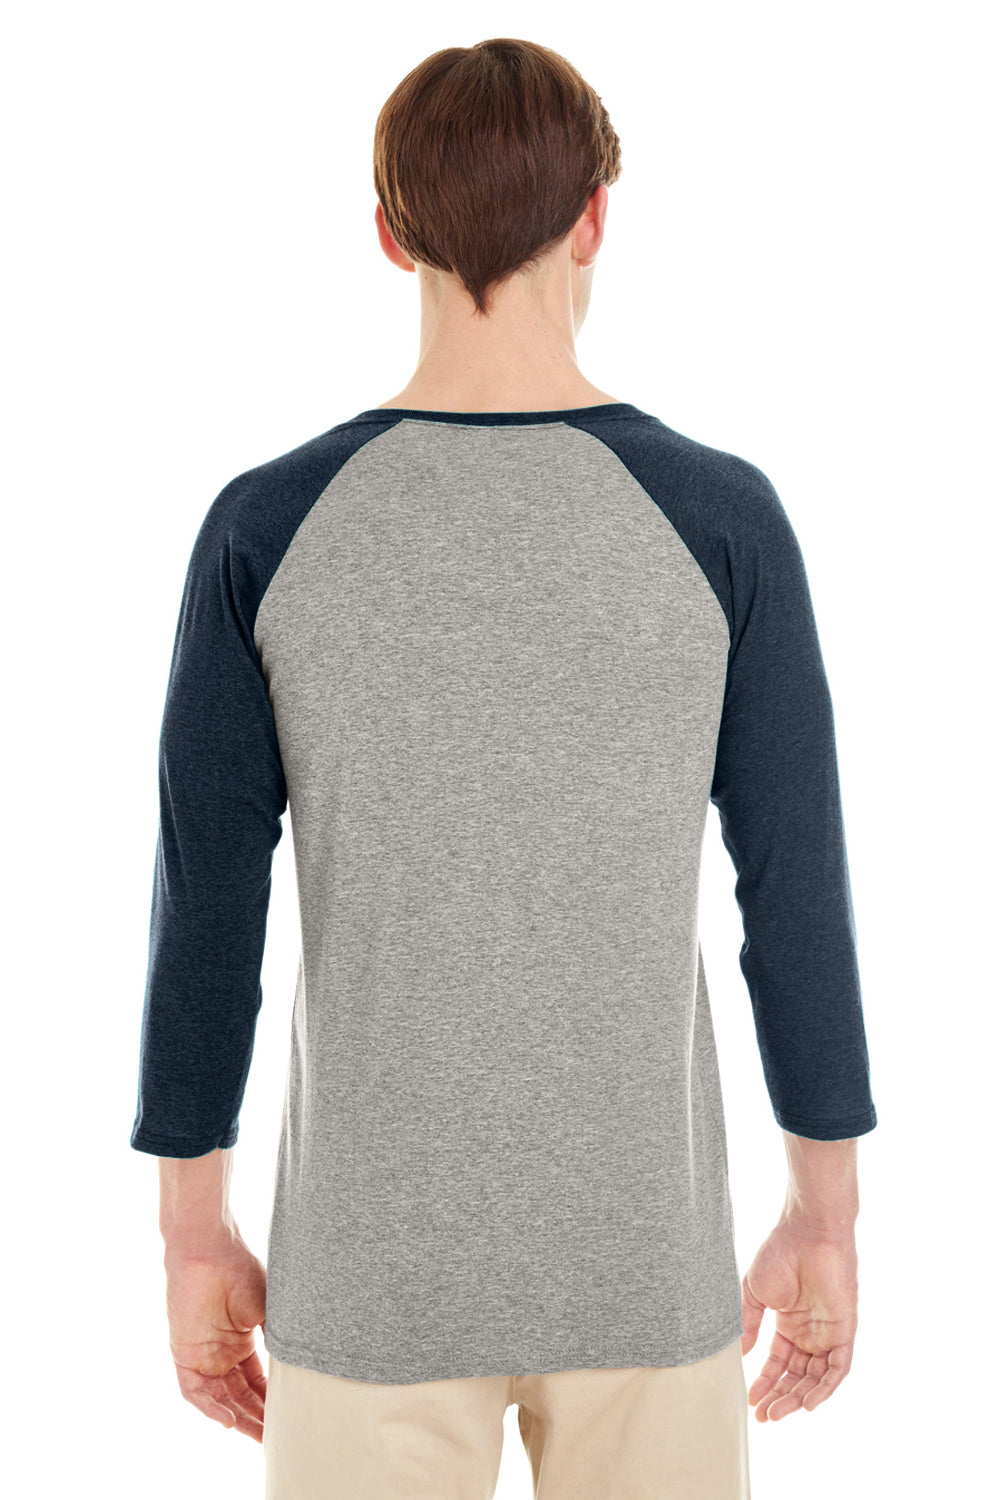 Jerzees 601RR 3/4 Sleeve Crewneck T-Shirt Oxford Grey/Indigo Blue Back